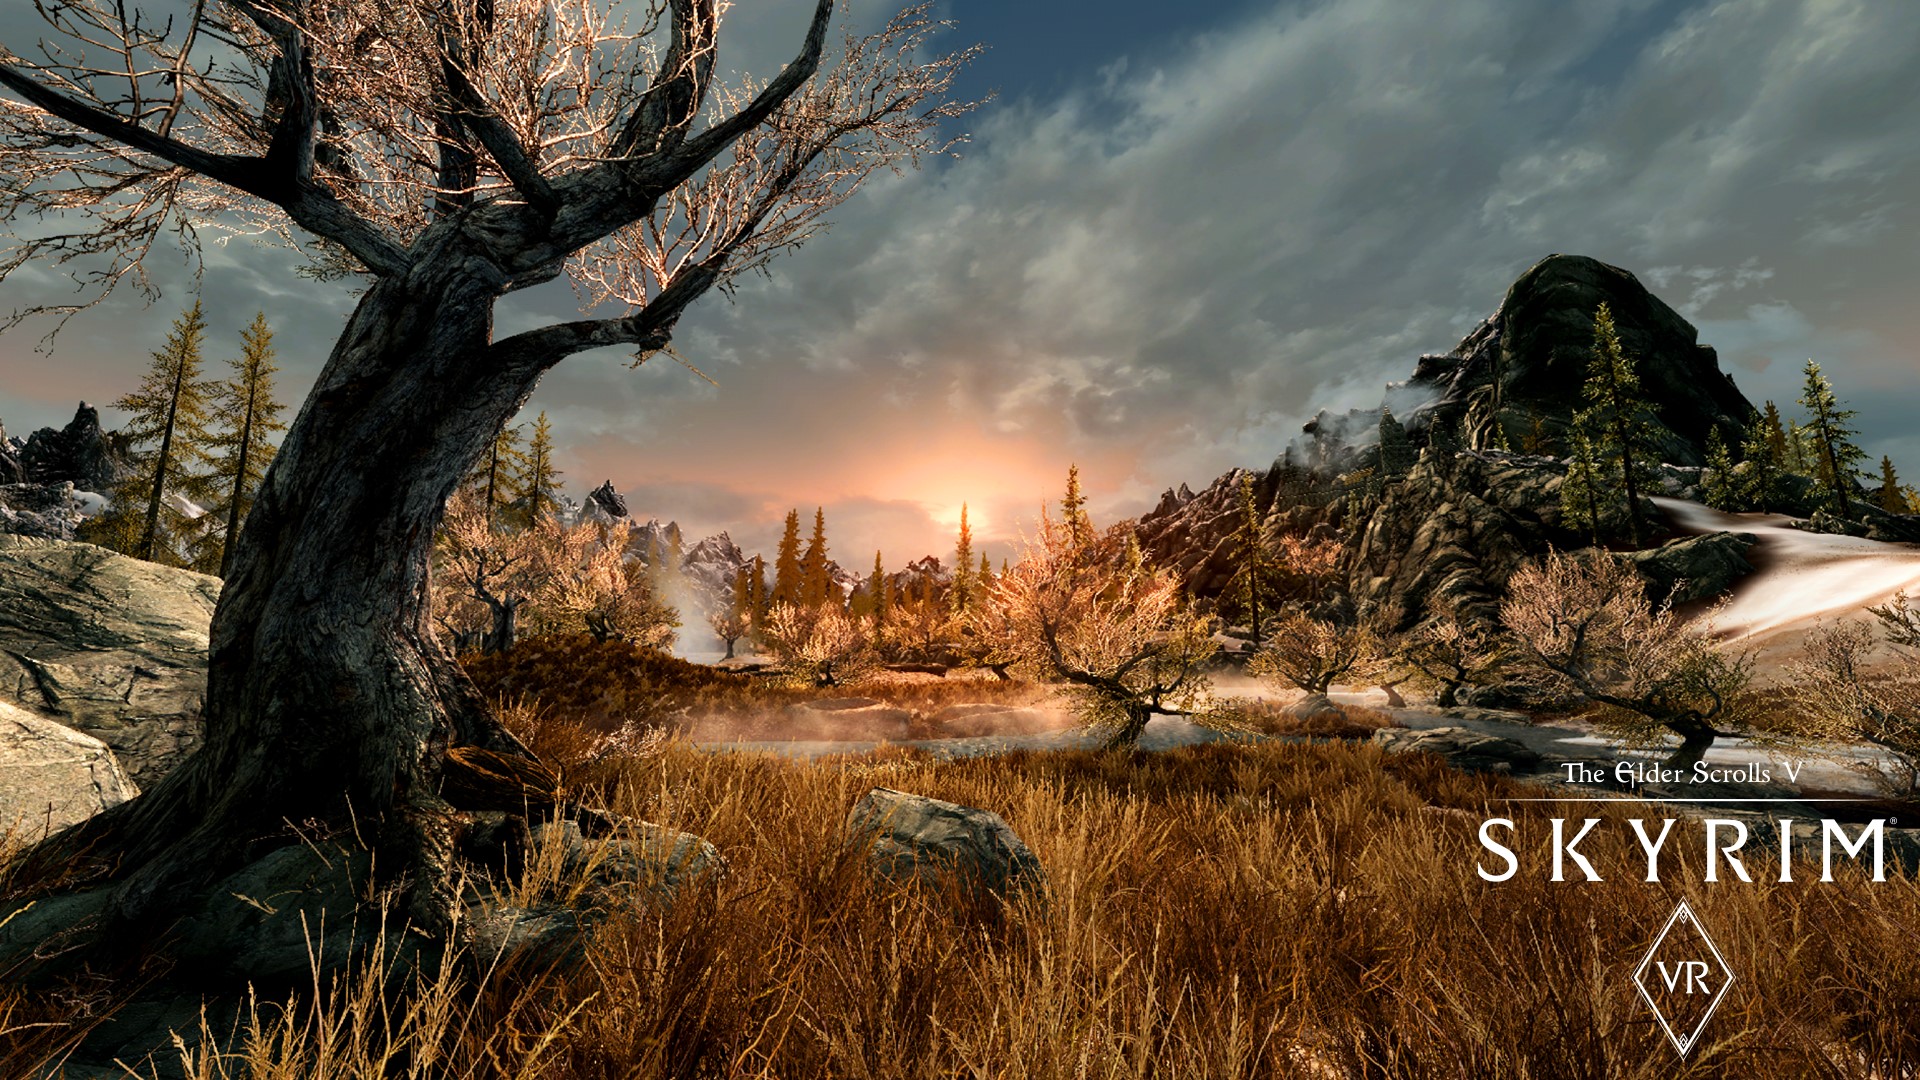 The Elder Scrolls V: Skyrim VR (Steam key) @ RU